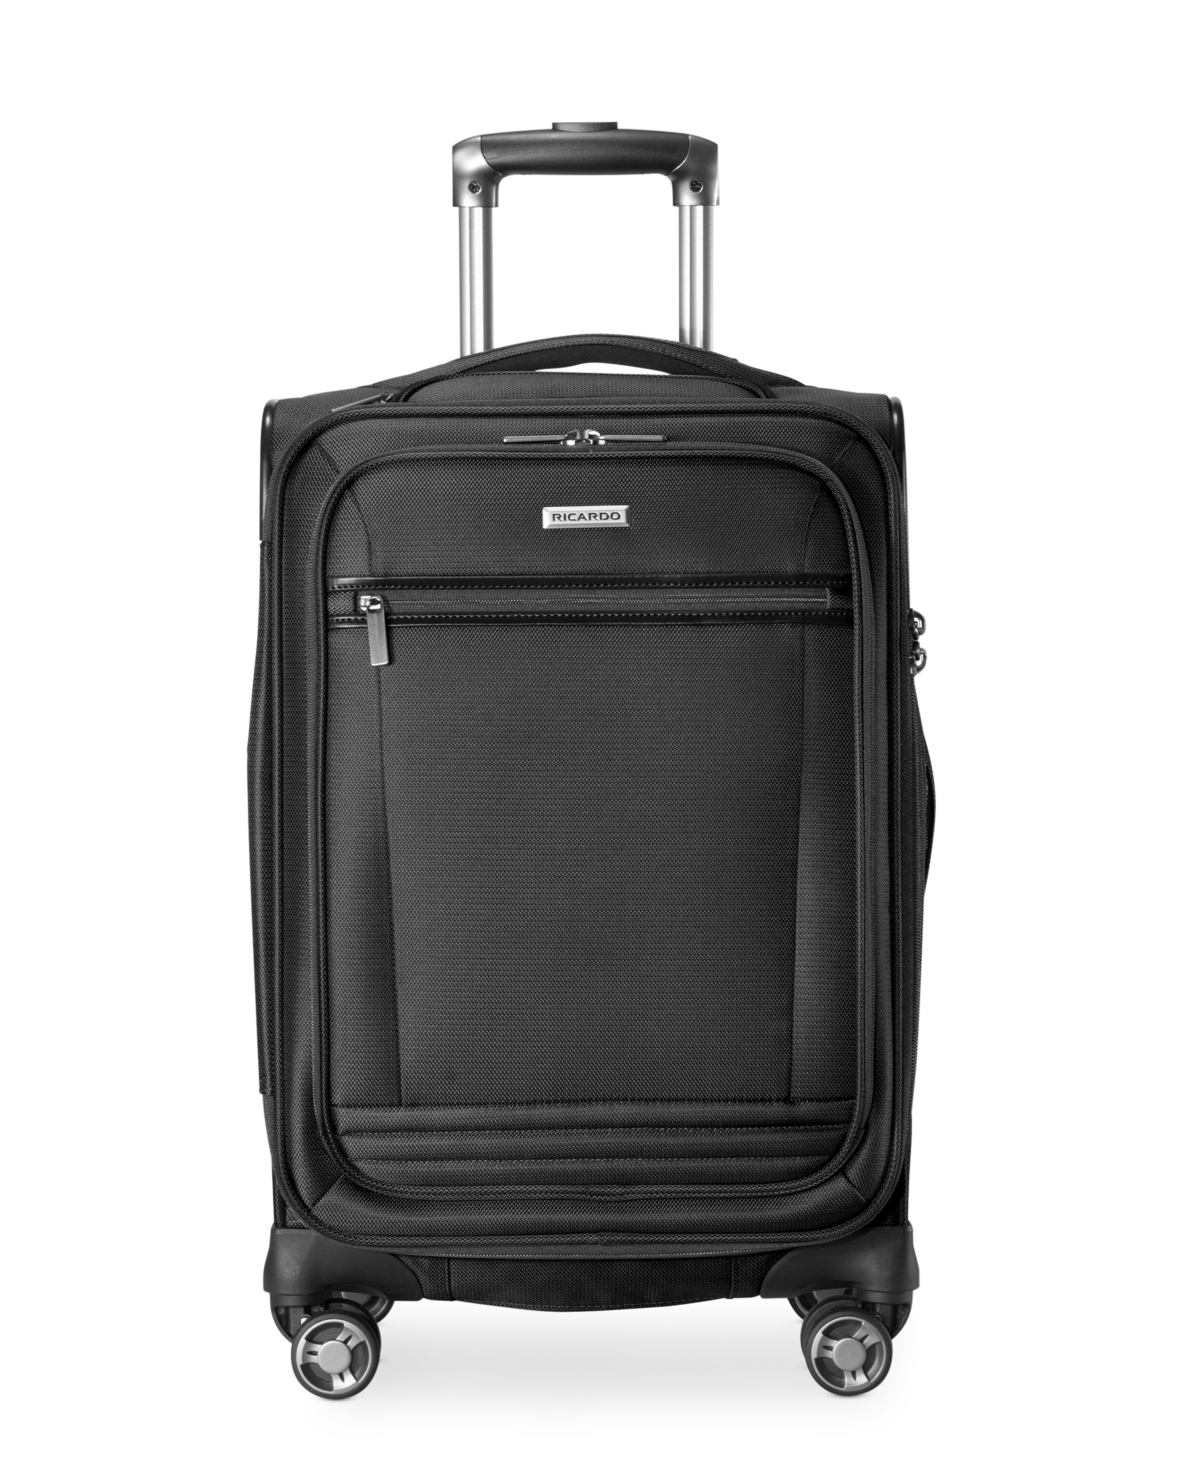 Ricardo Avalon Softside 20" Carry-on Spinner Suitcase In Black